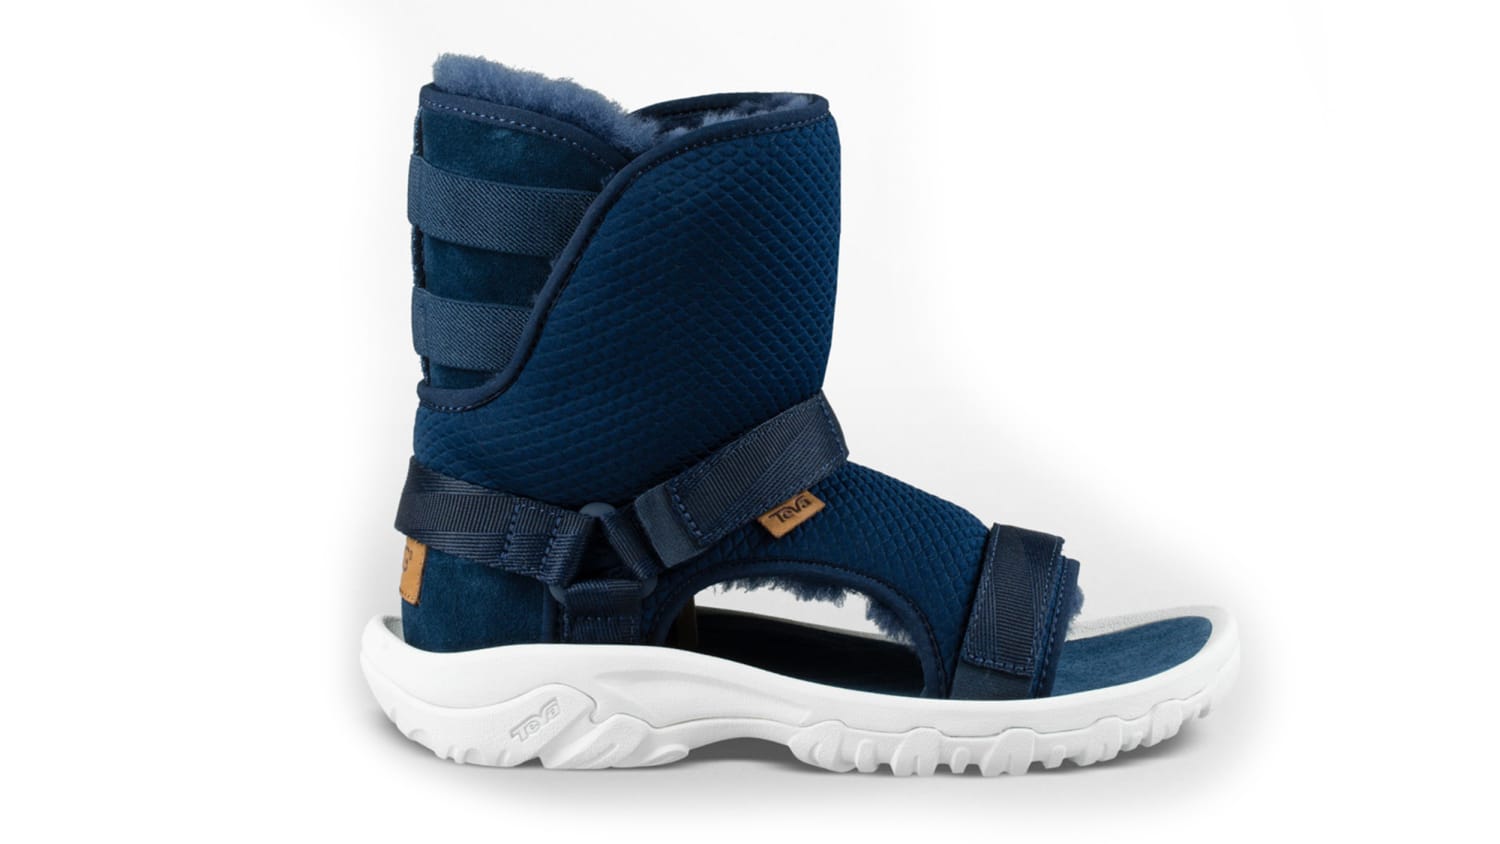 sandal type boot